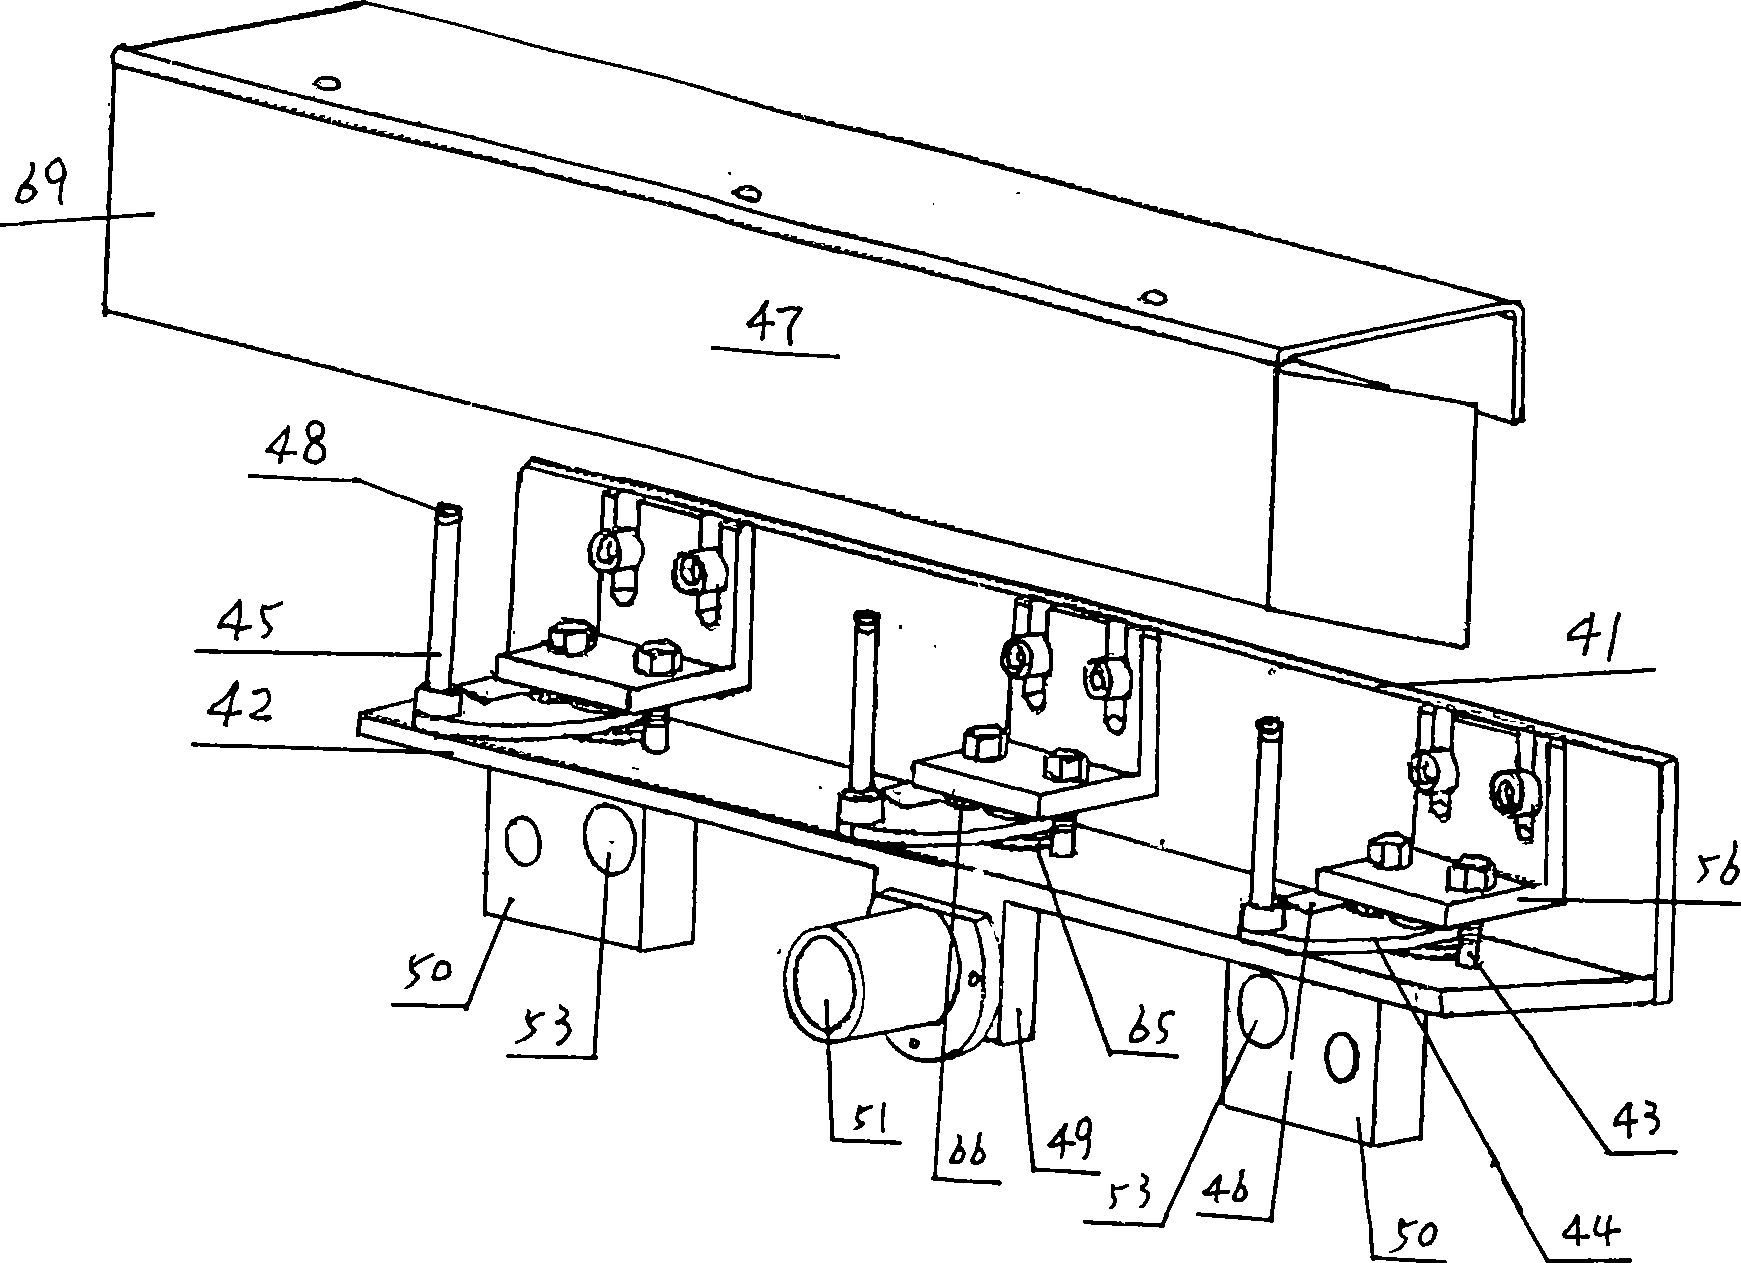 Secondary impression device of corrugated case